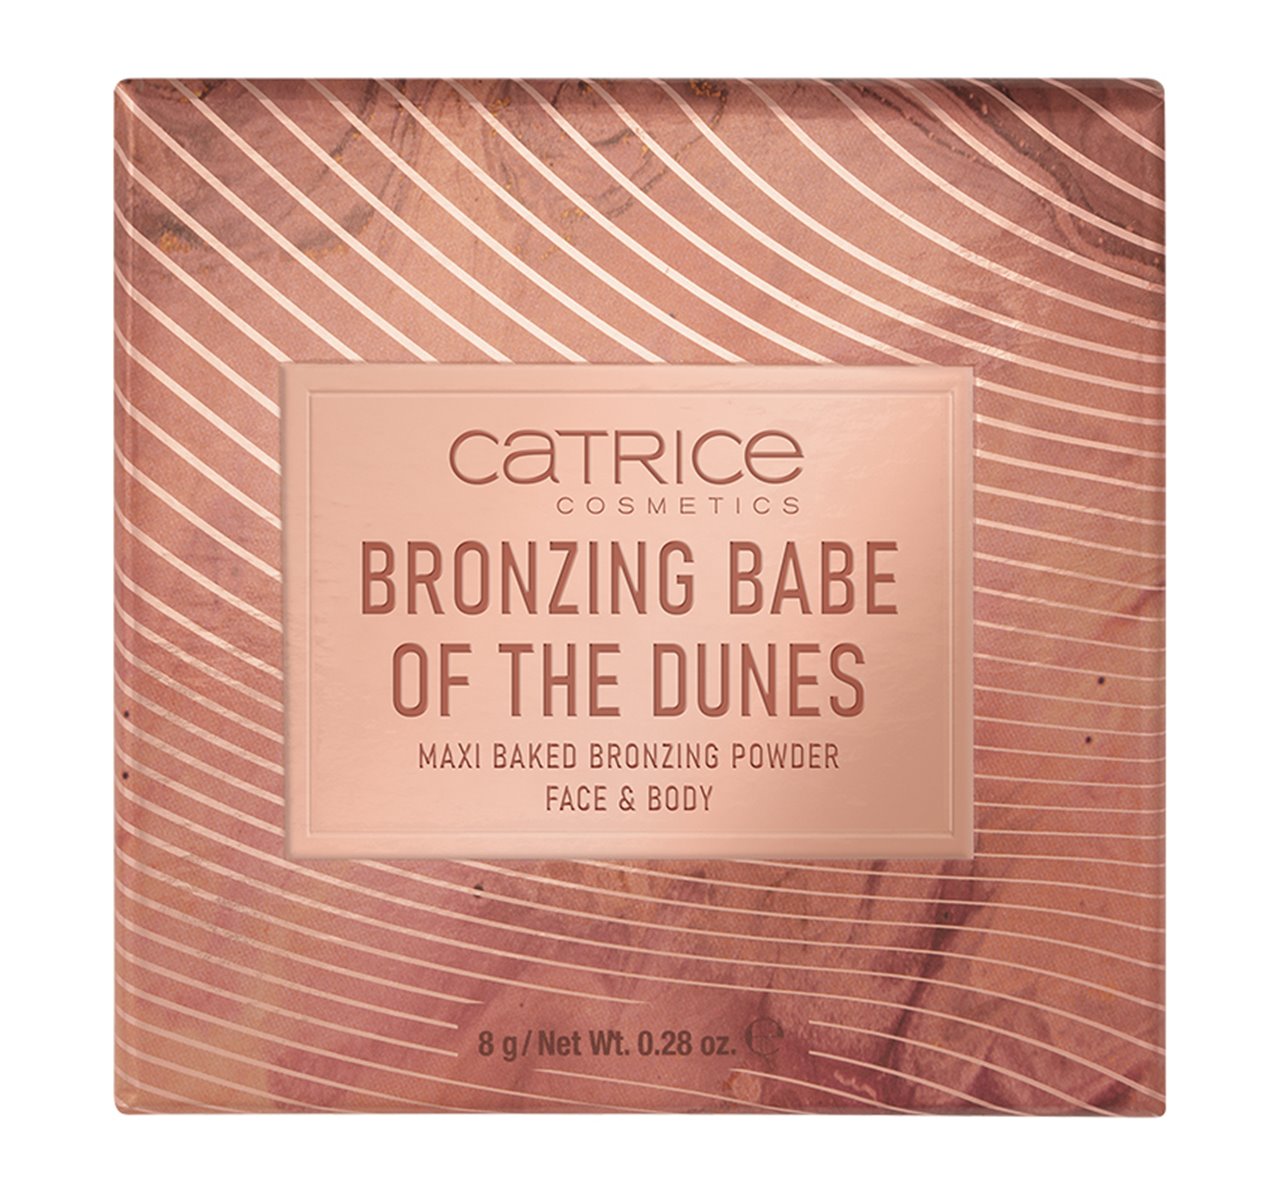 Bronzing Babe Dunes Catrice The Bronzing Powder-Face Of Baked Maxi